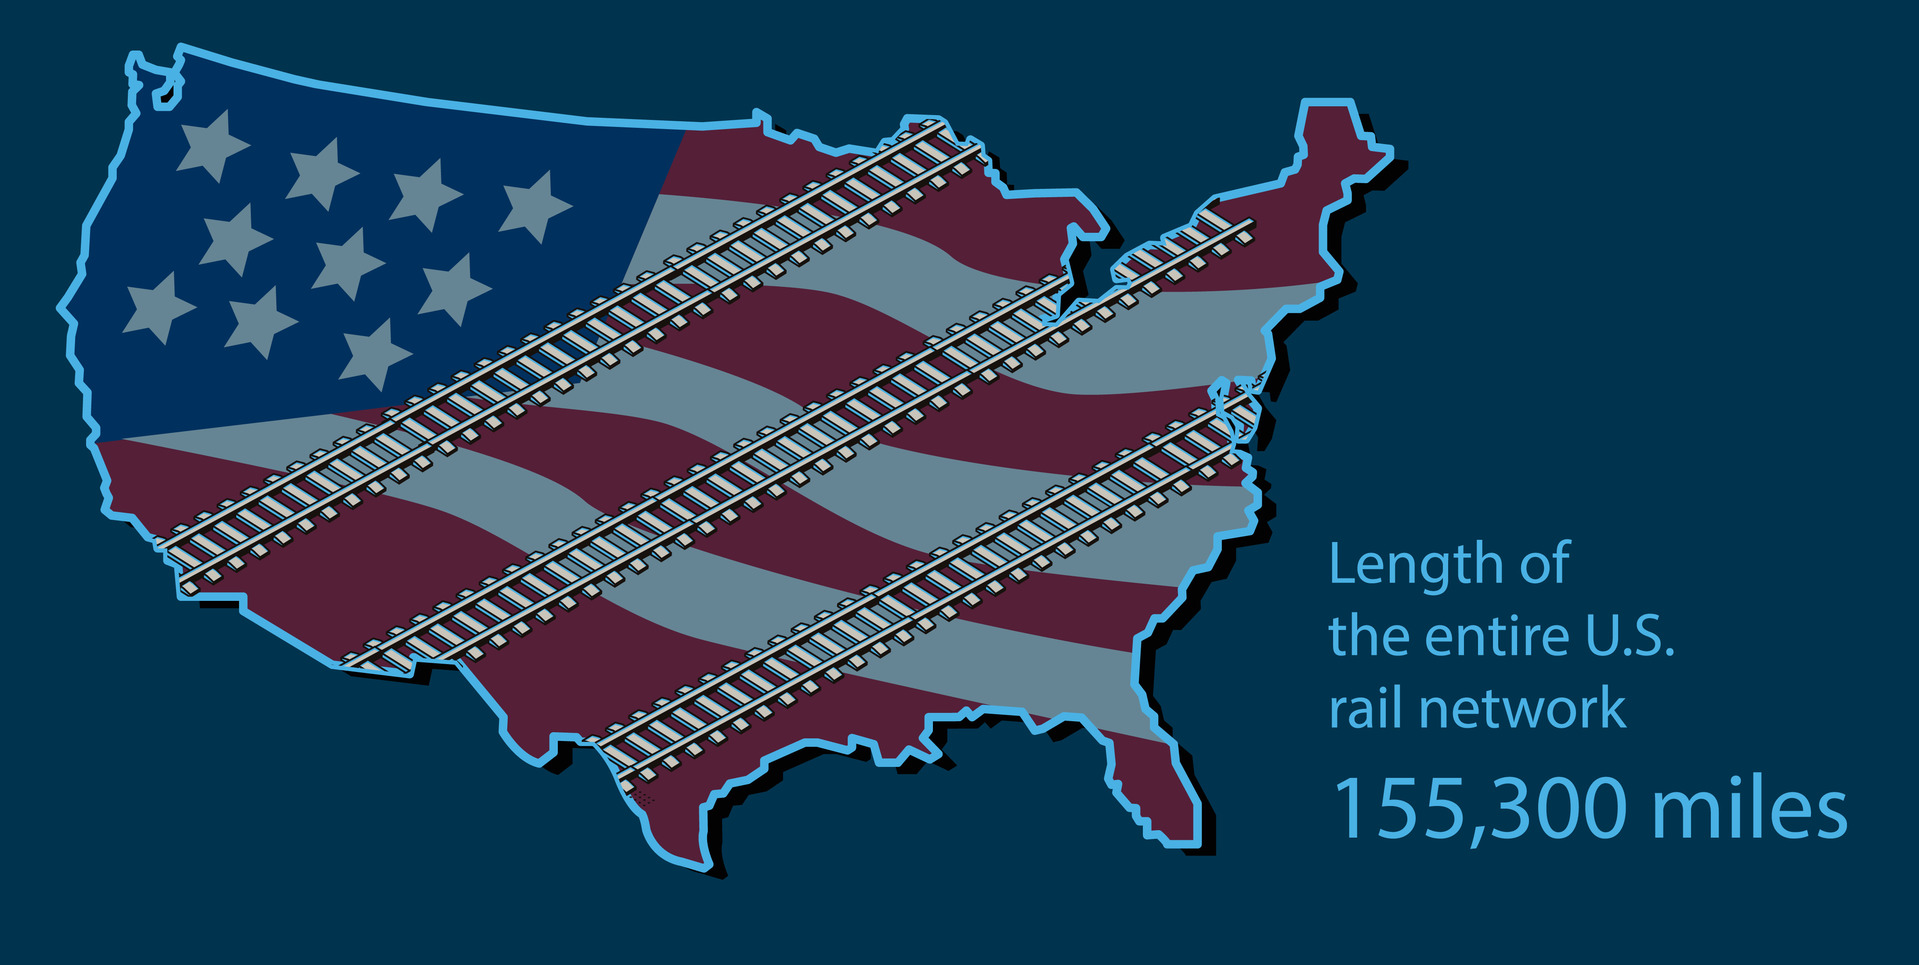 U.S. rail network